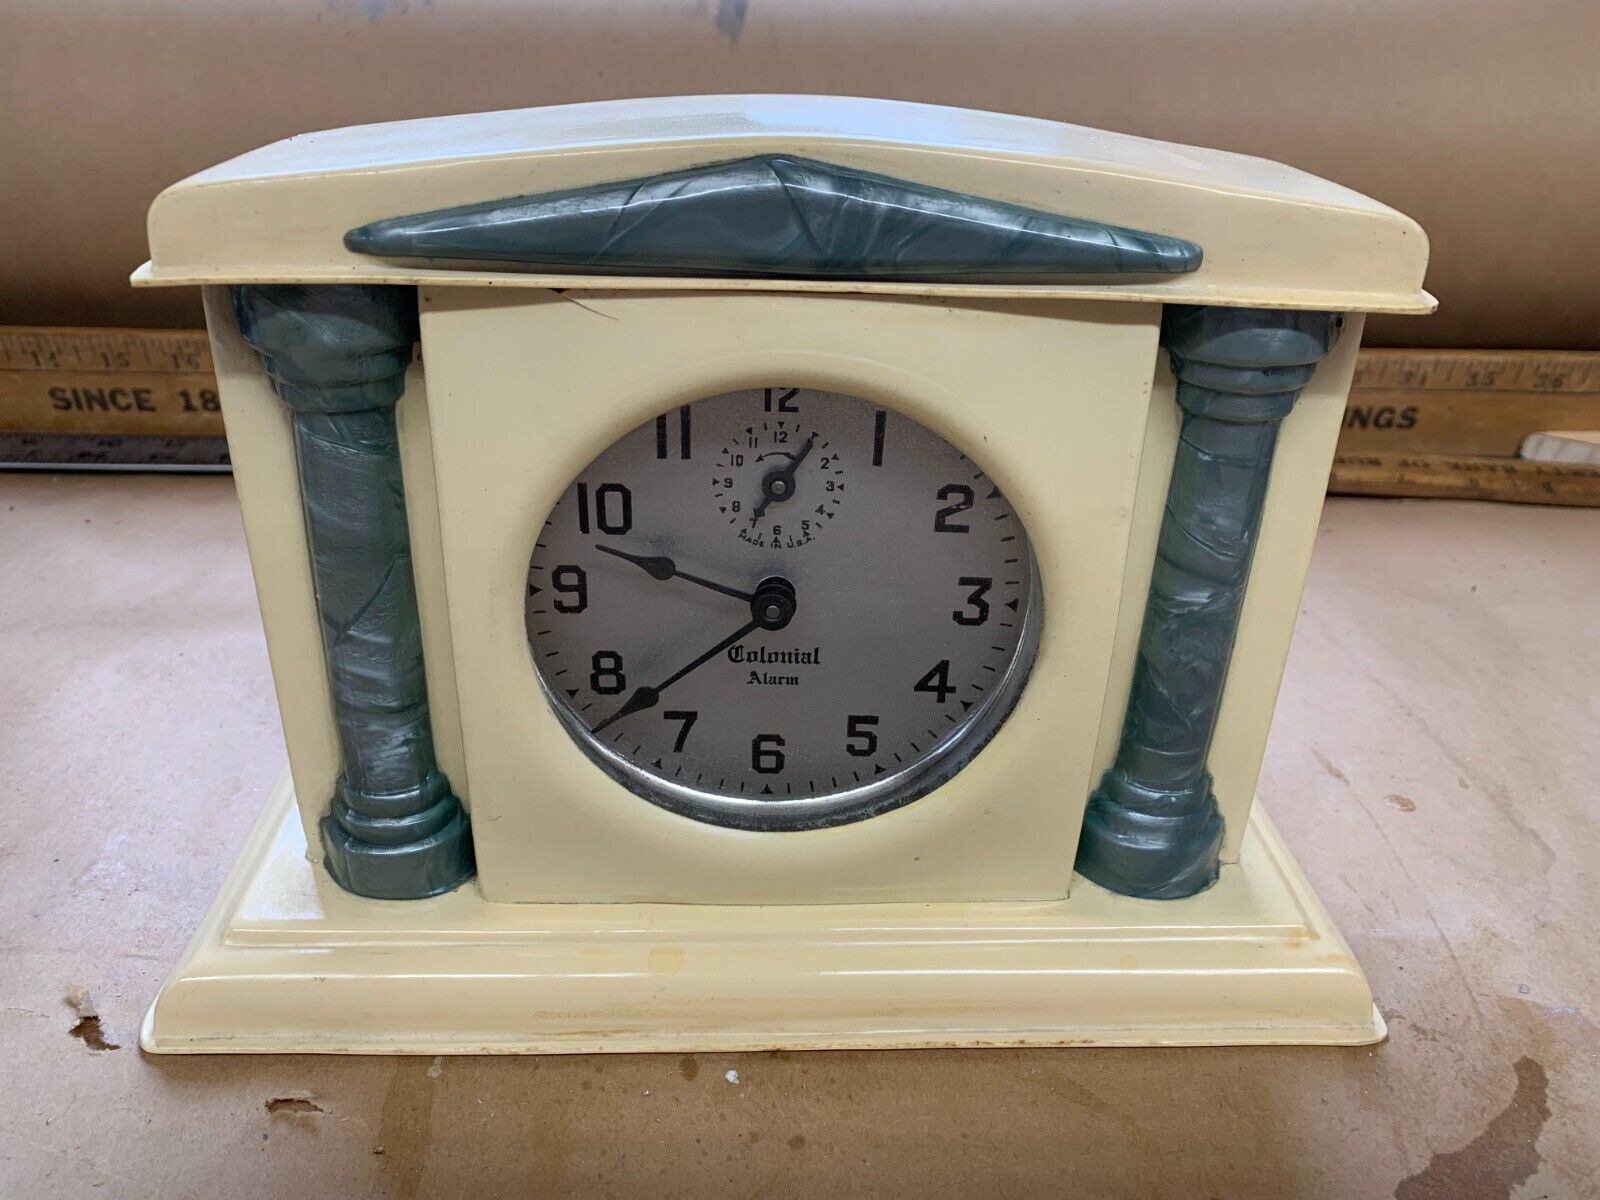 Colonial Alarm Clock 1913 Bakelite Edwardian Art Deco Rare Antique Clock Works